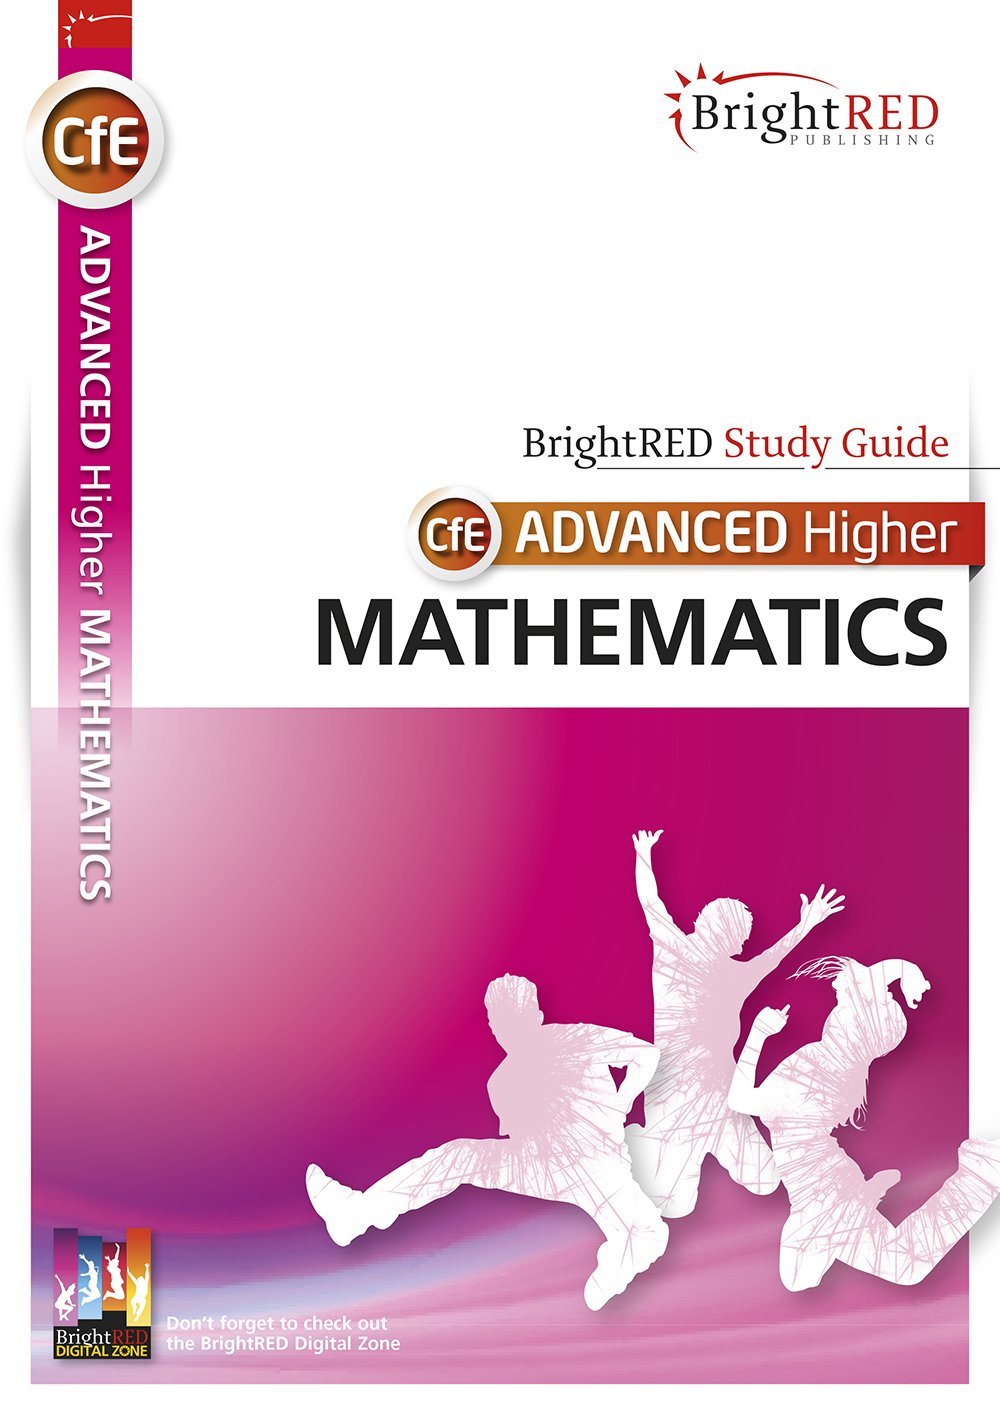 CFE Advanced Higher Mathematics Study Mathematics | Linda Moon, Philip Moon